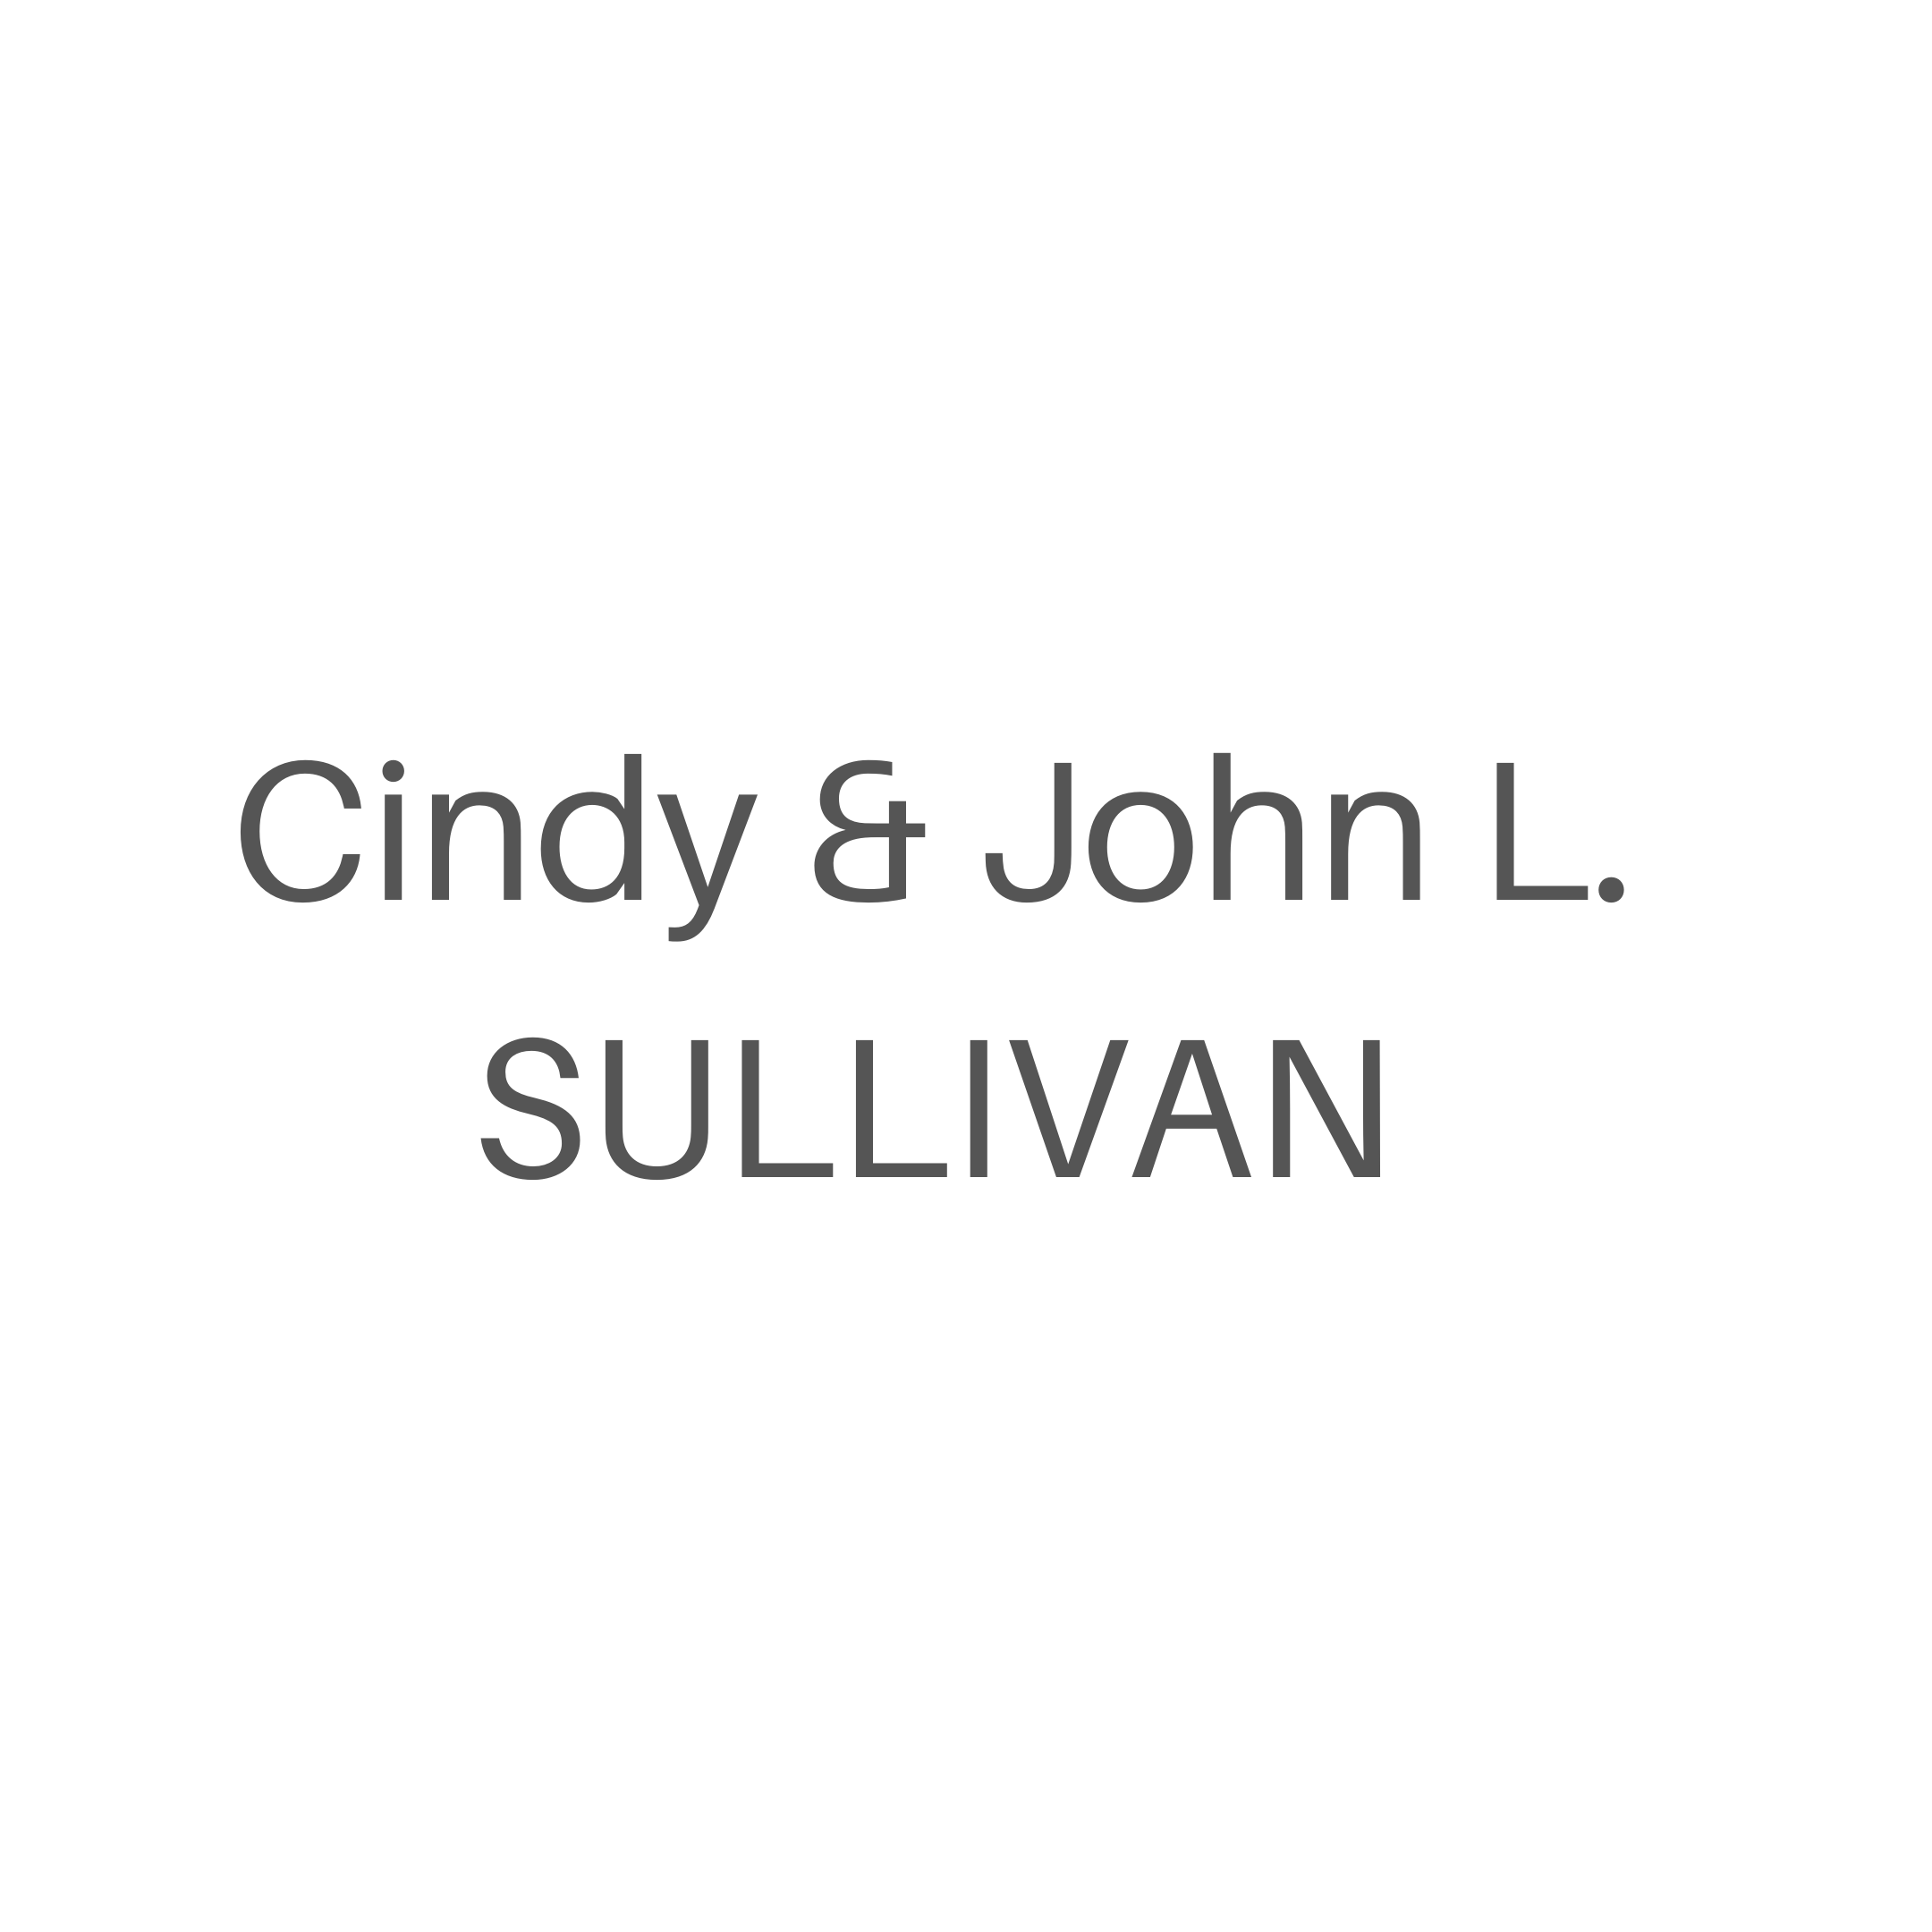 Cindy & John L. Sullivan